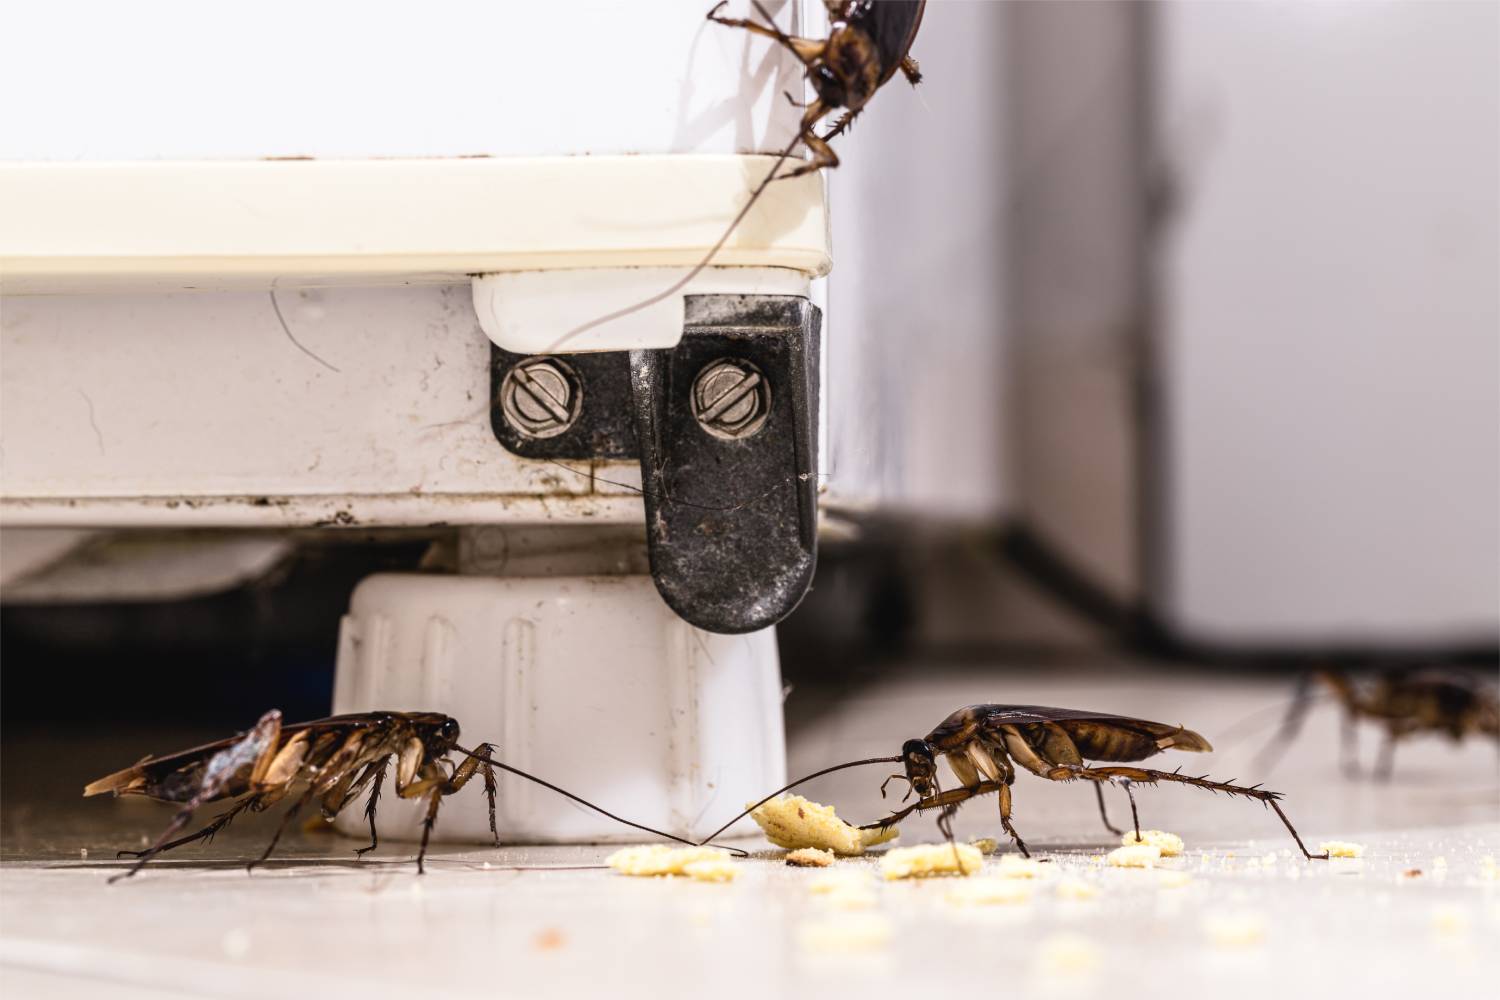 cockroaches around base of fridge with crumbs